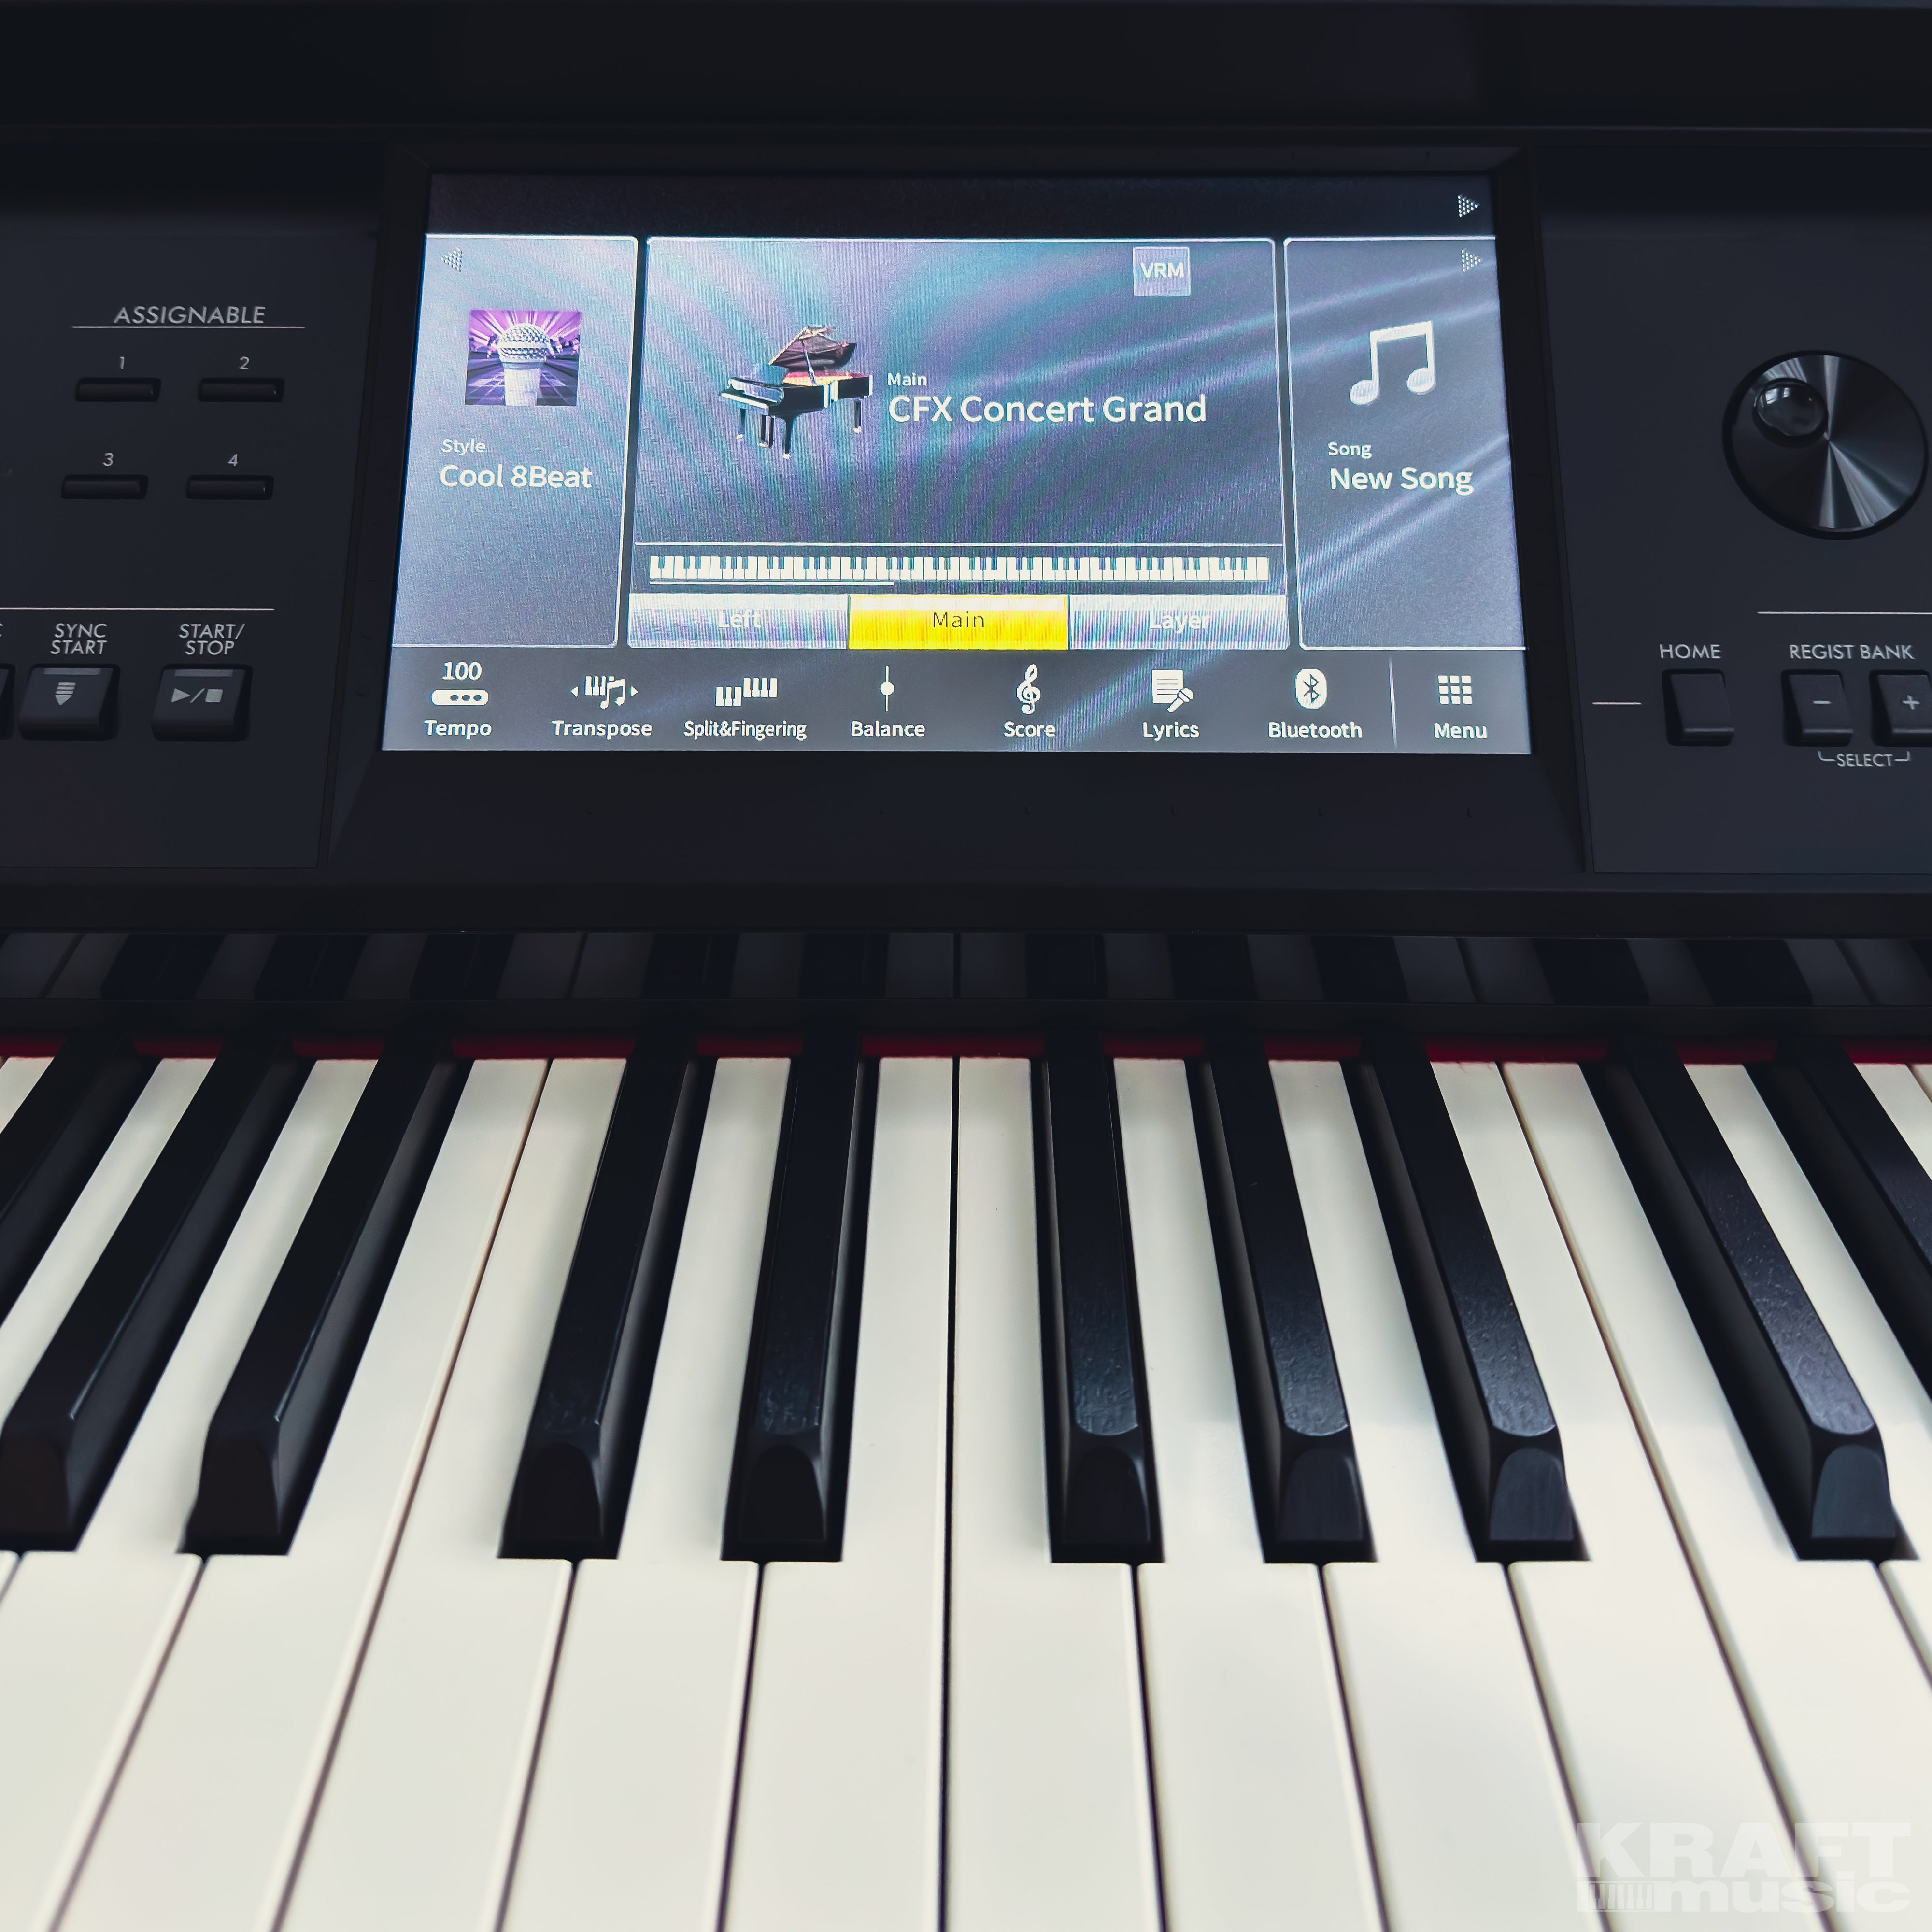 Yamaha Clavinova CVP-909 Digital Piano - Matte Black - controls view 2 with LED screen